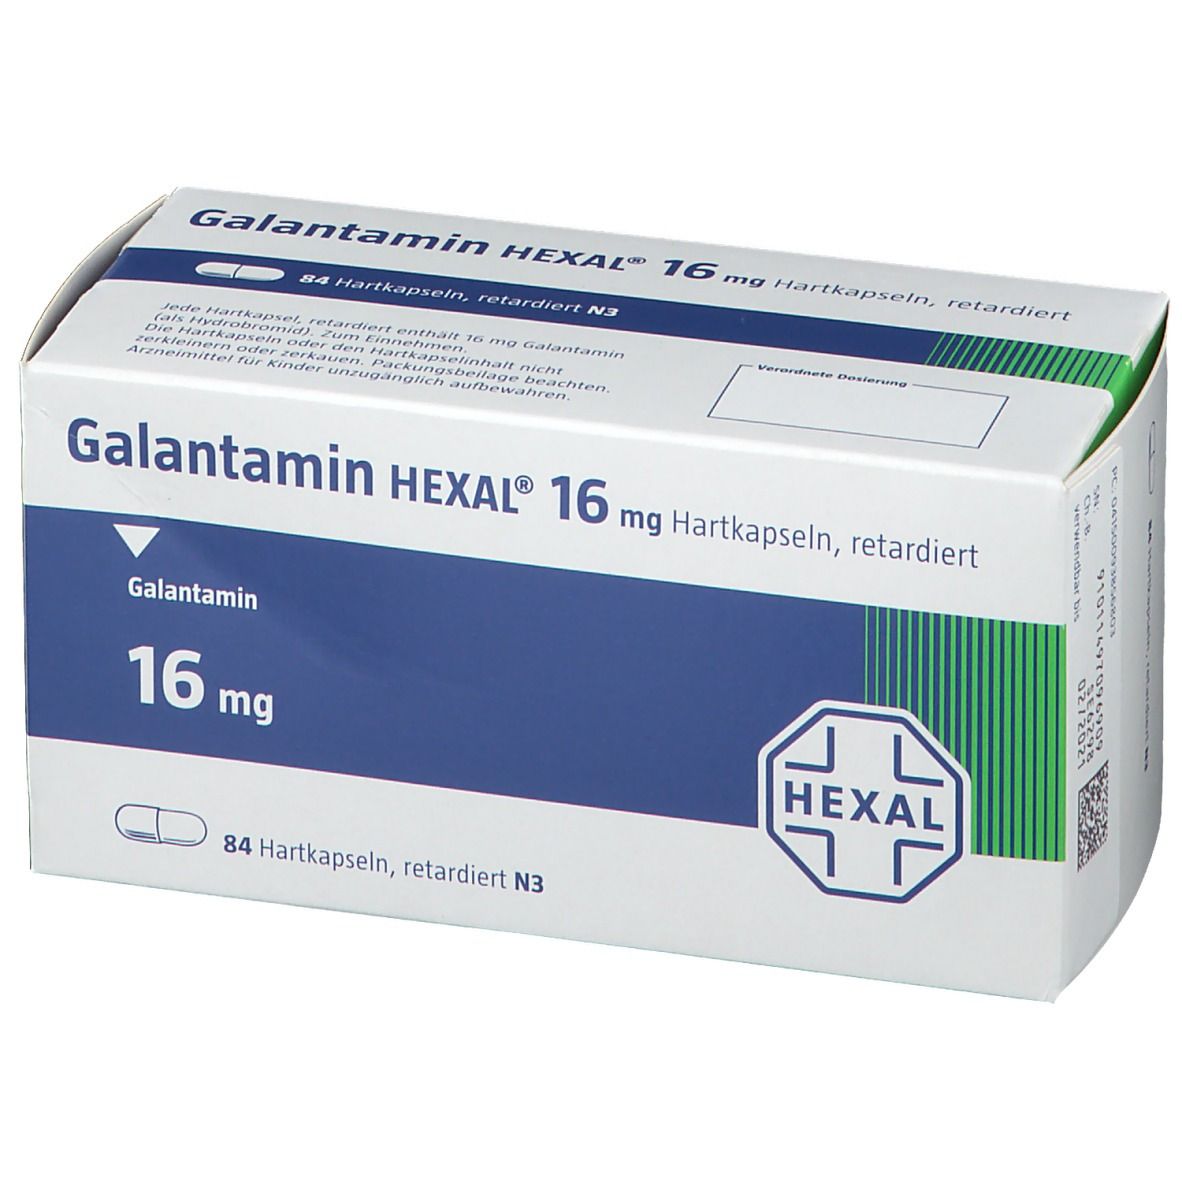 Galantamin HEXAL® 16 mg